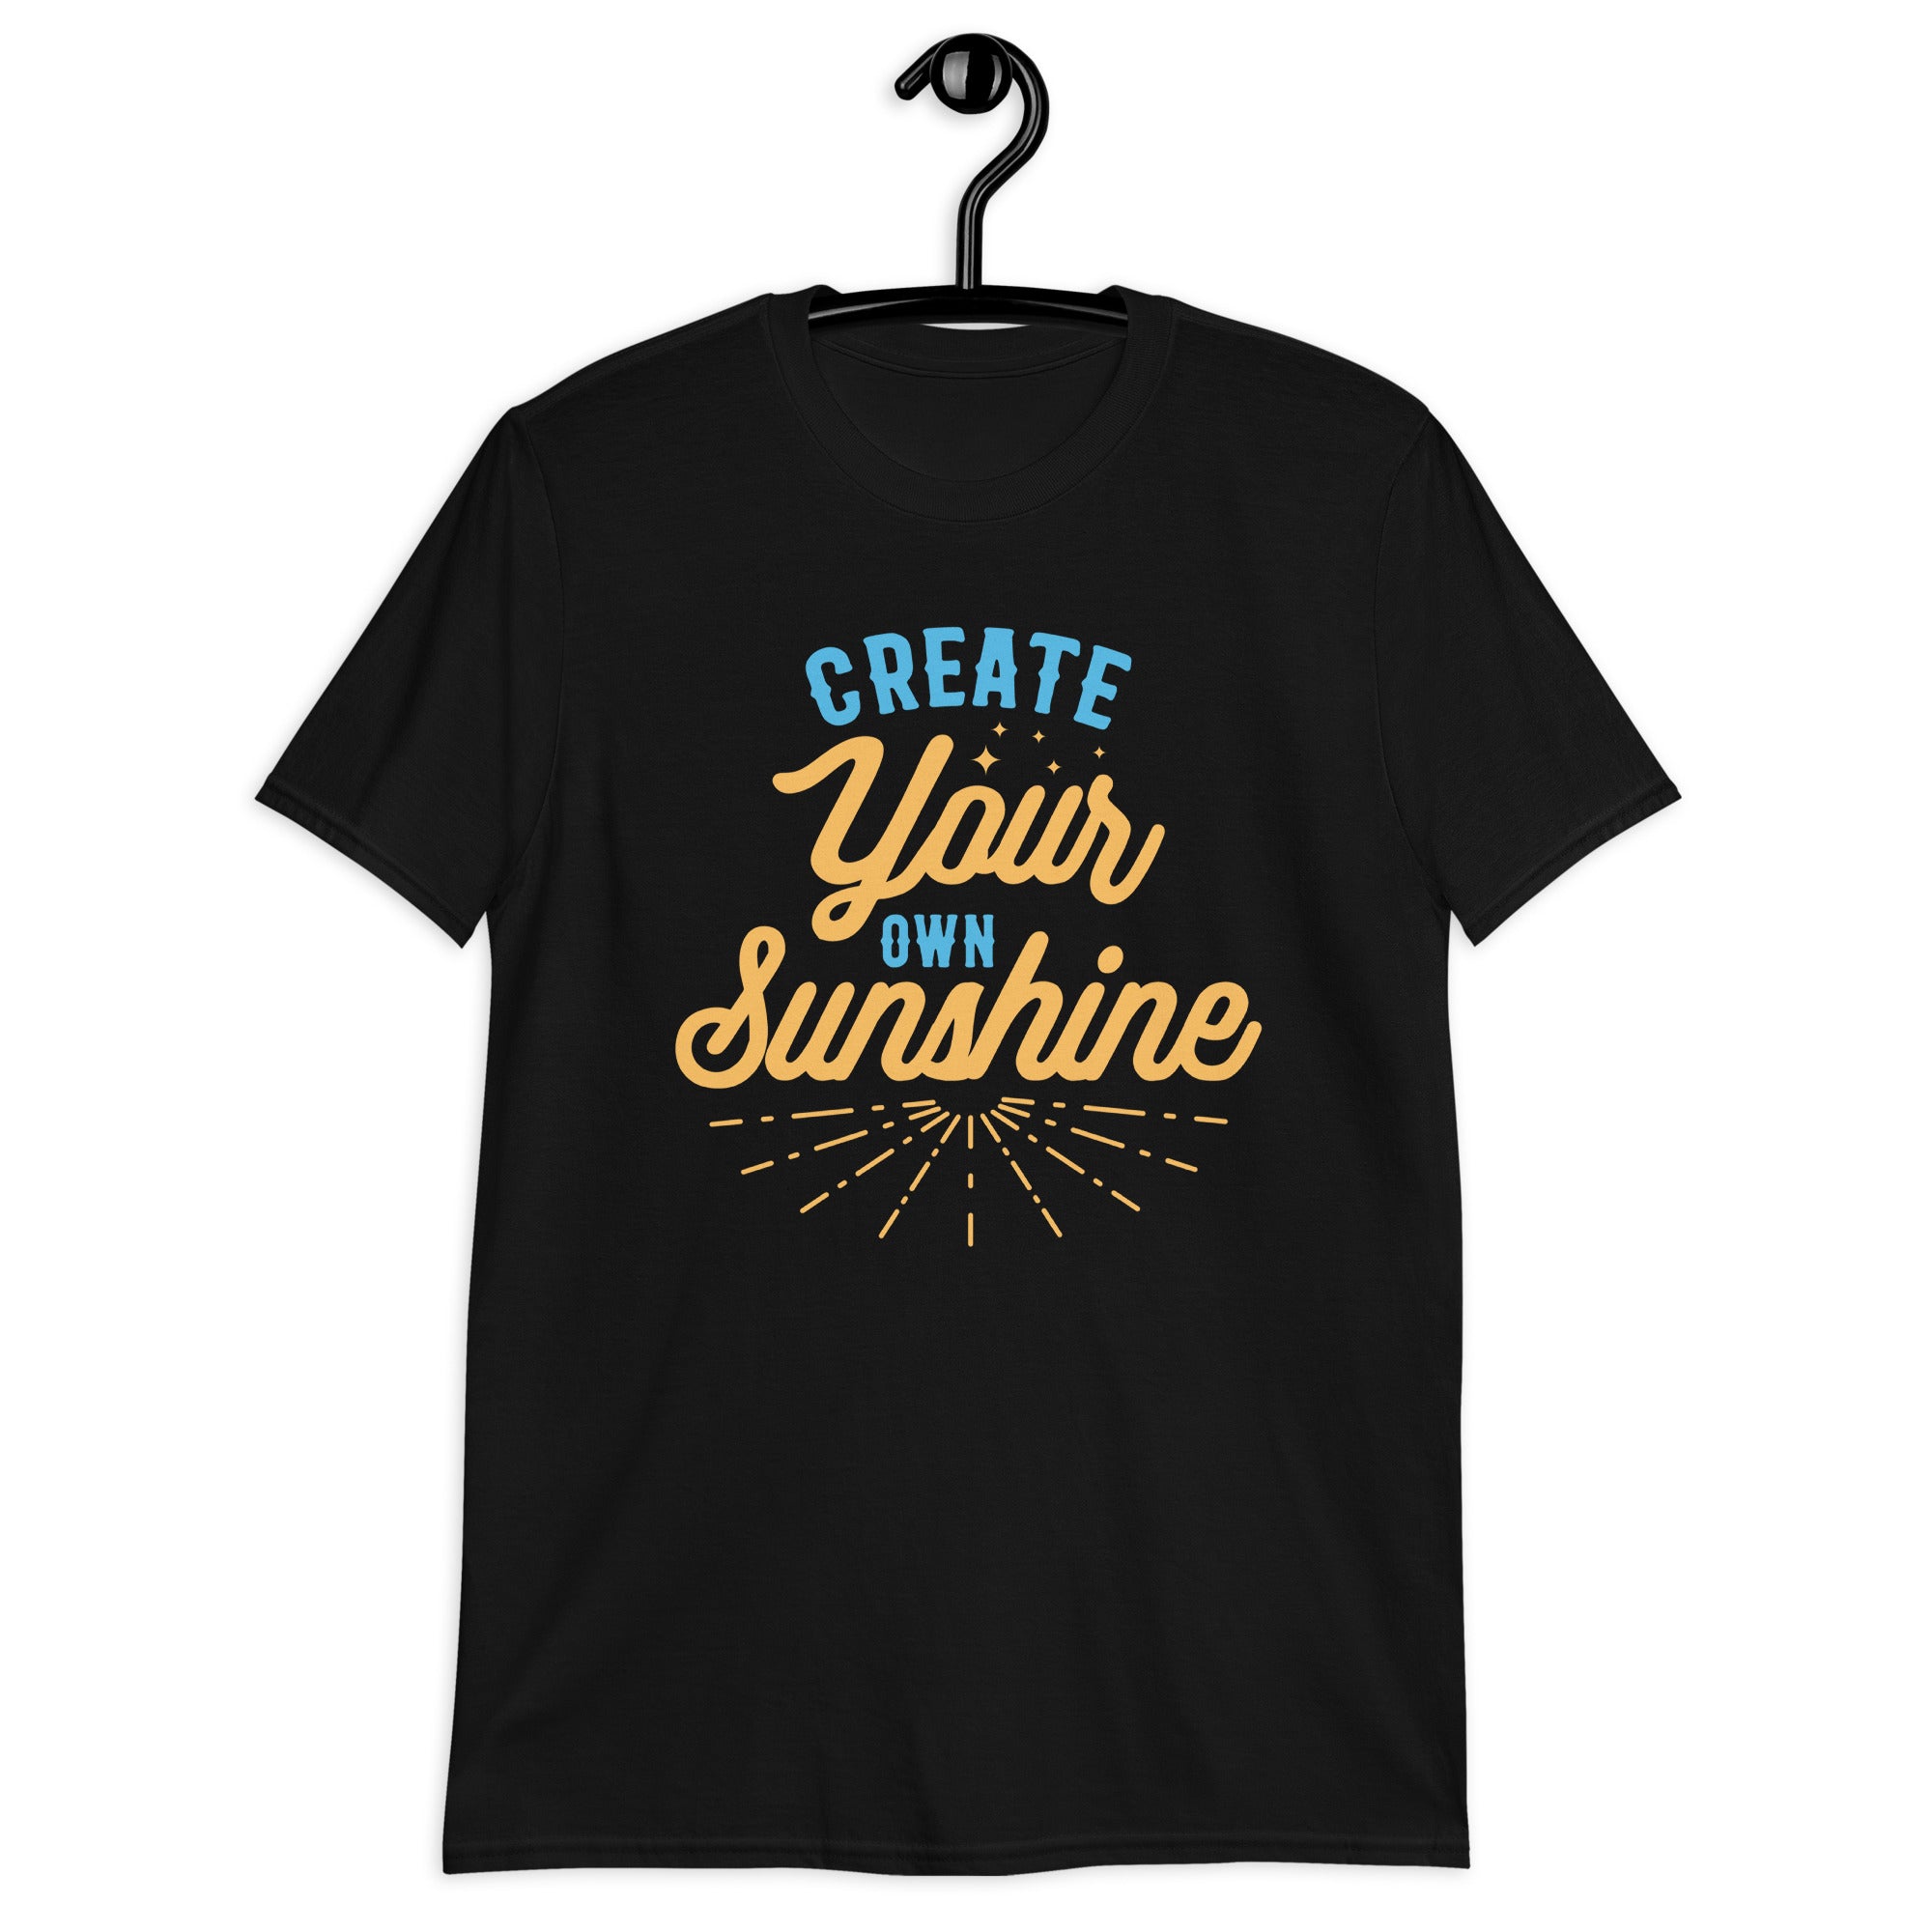 Create Your Own Sunshine - Short-Sleeve Unisex T-Shirt